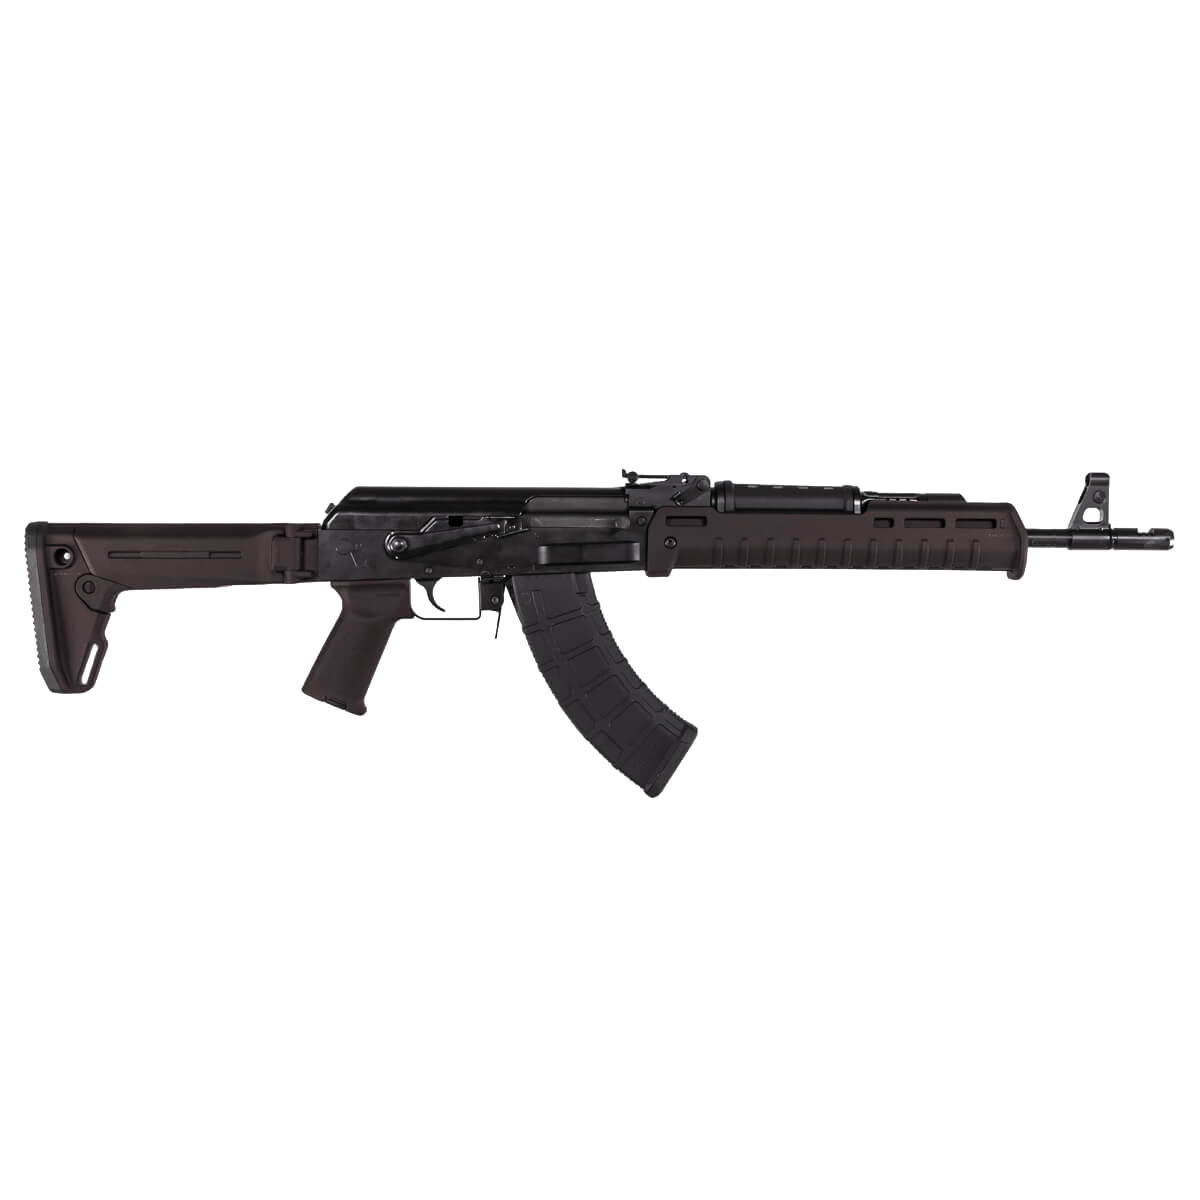 Předpažbí Magpul ZHUKOV AK-47/AK-74, Plum